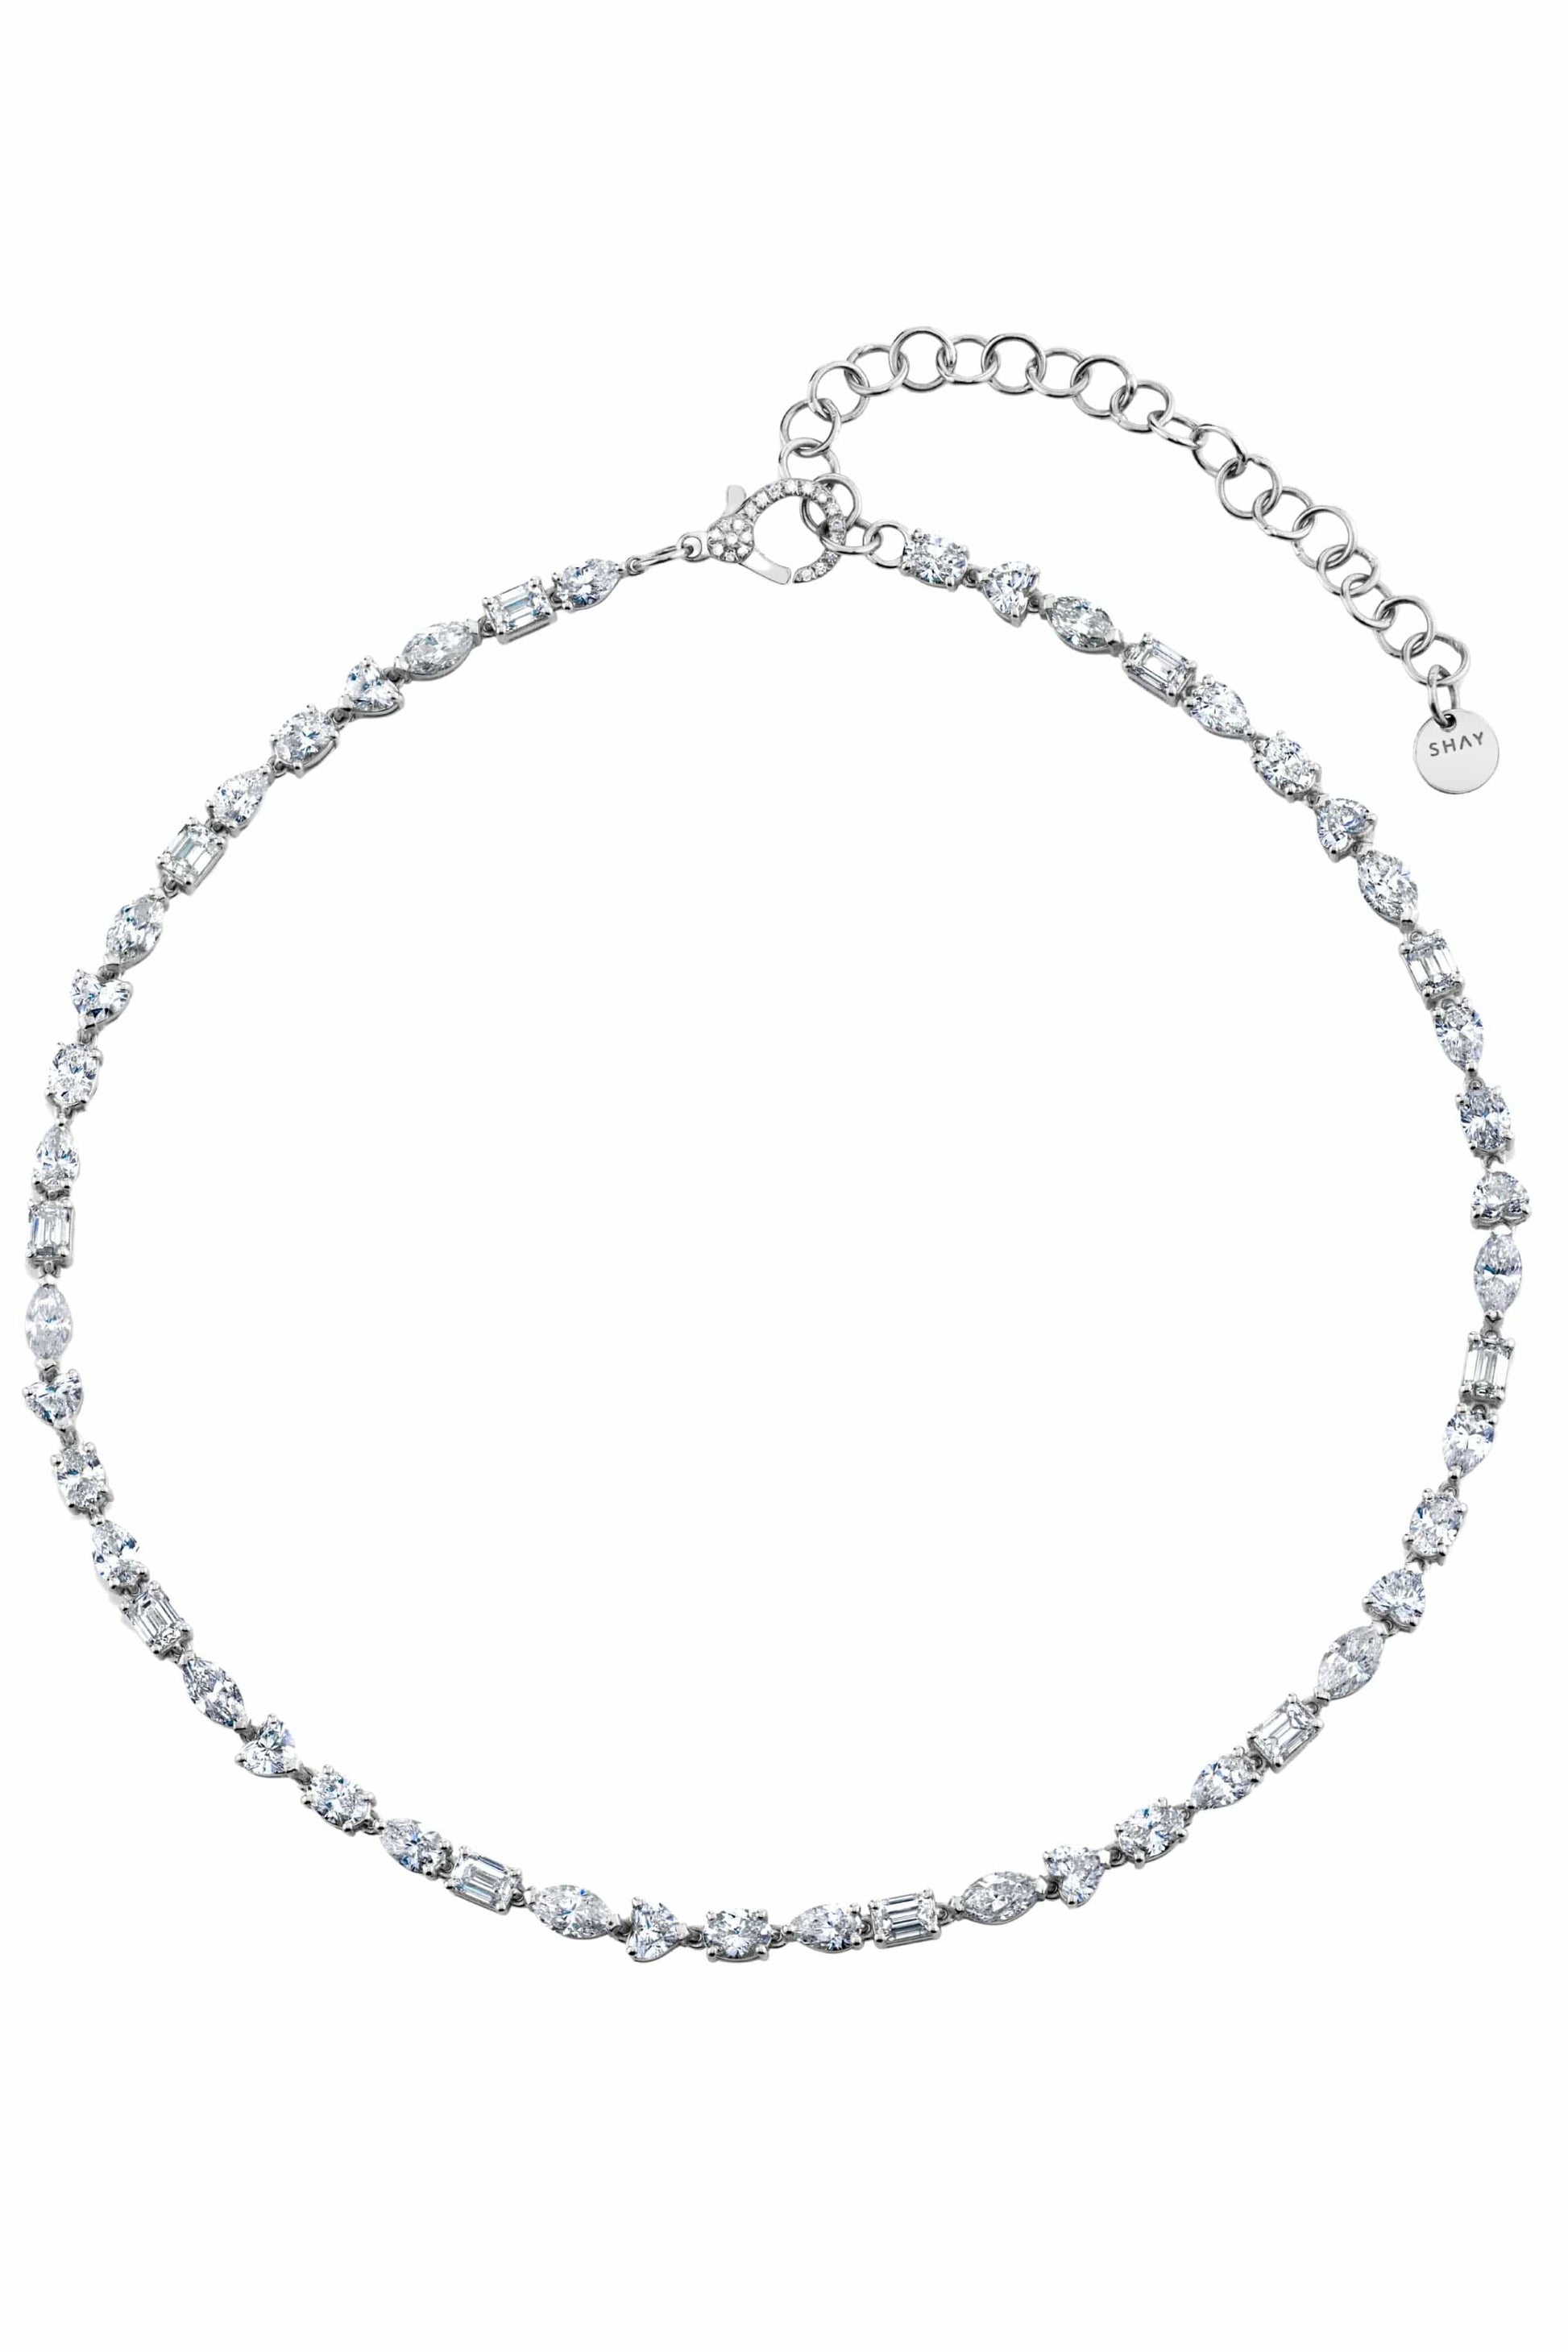 SHAY JEWELRY-Mini Mixed Diamond Tennis Necklace-WHITE GOLD